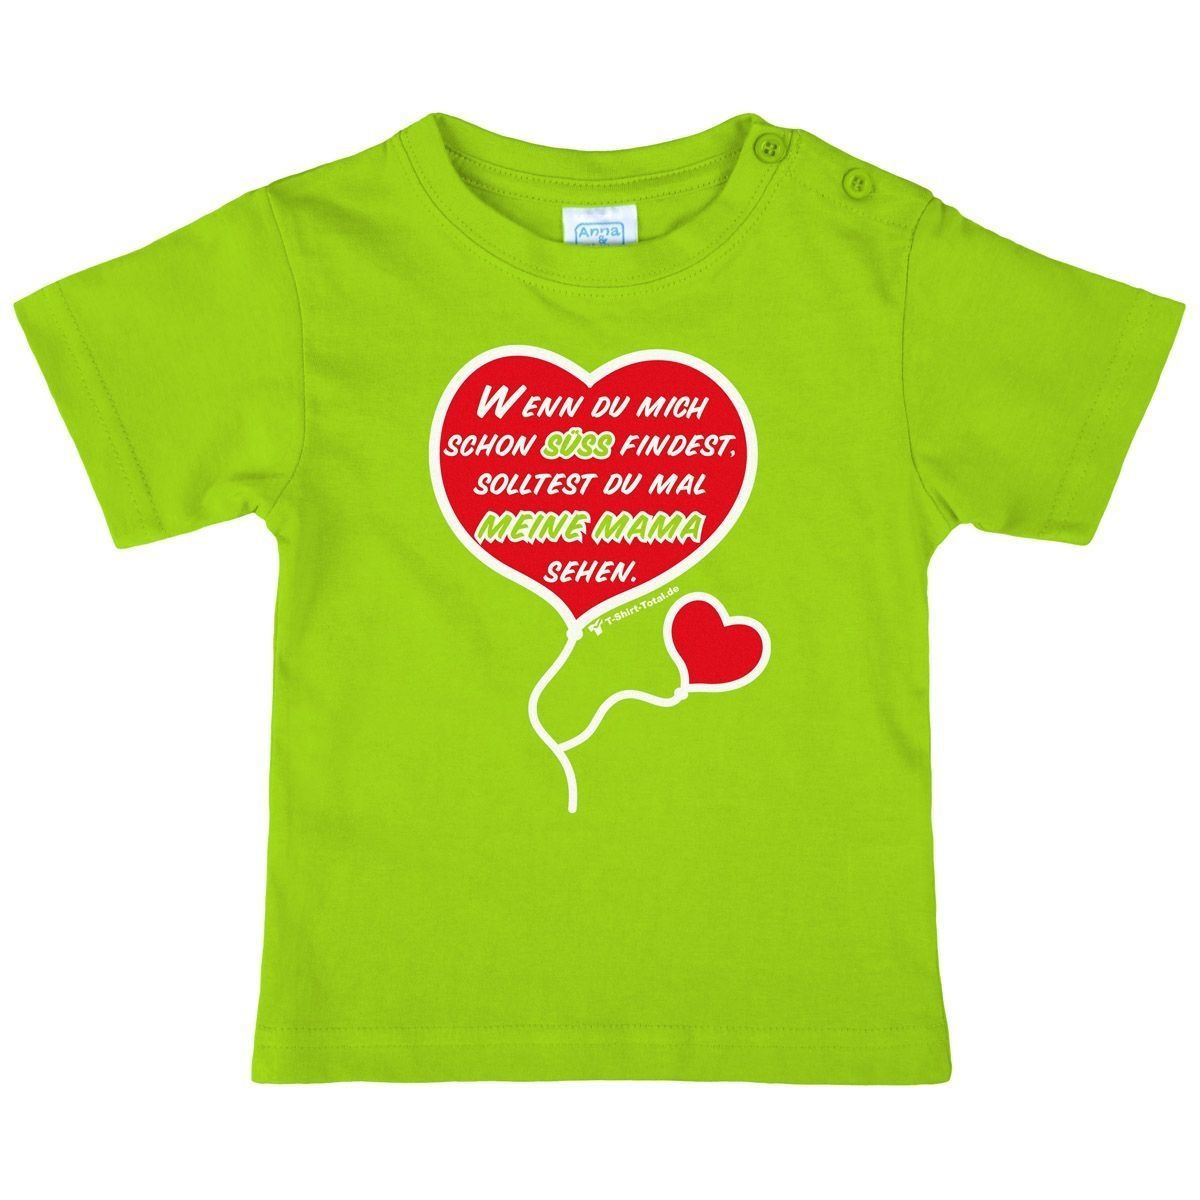 Süß finden Kinder T-Shirt hellgrün 98